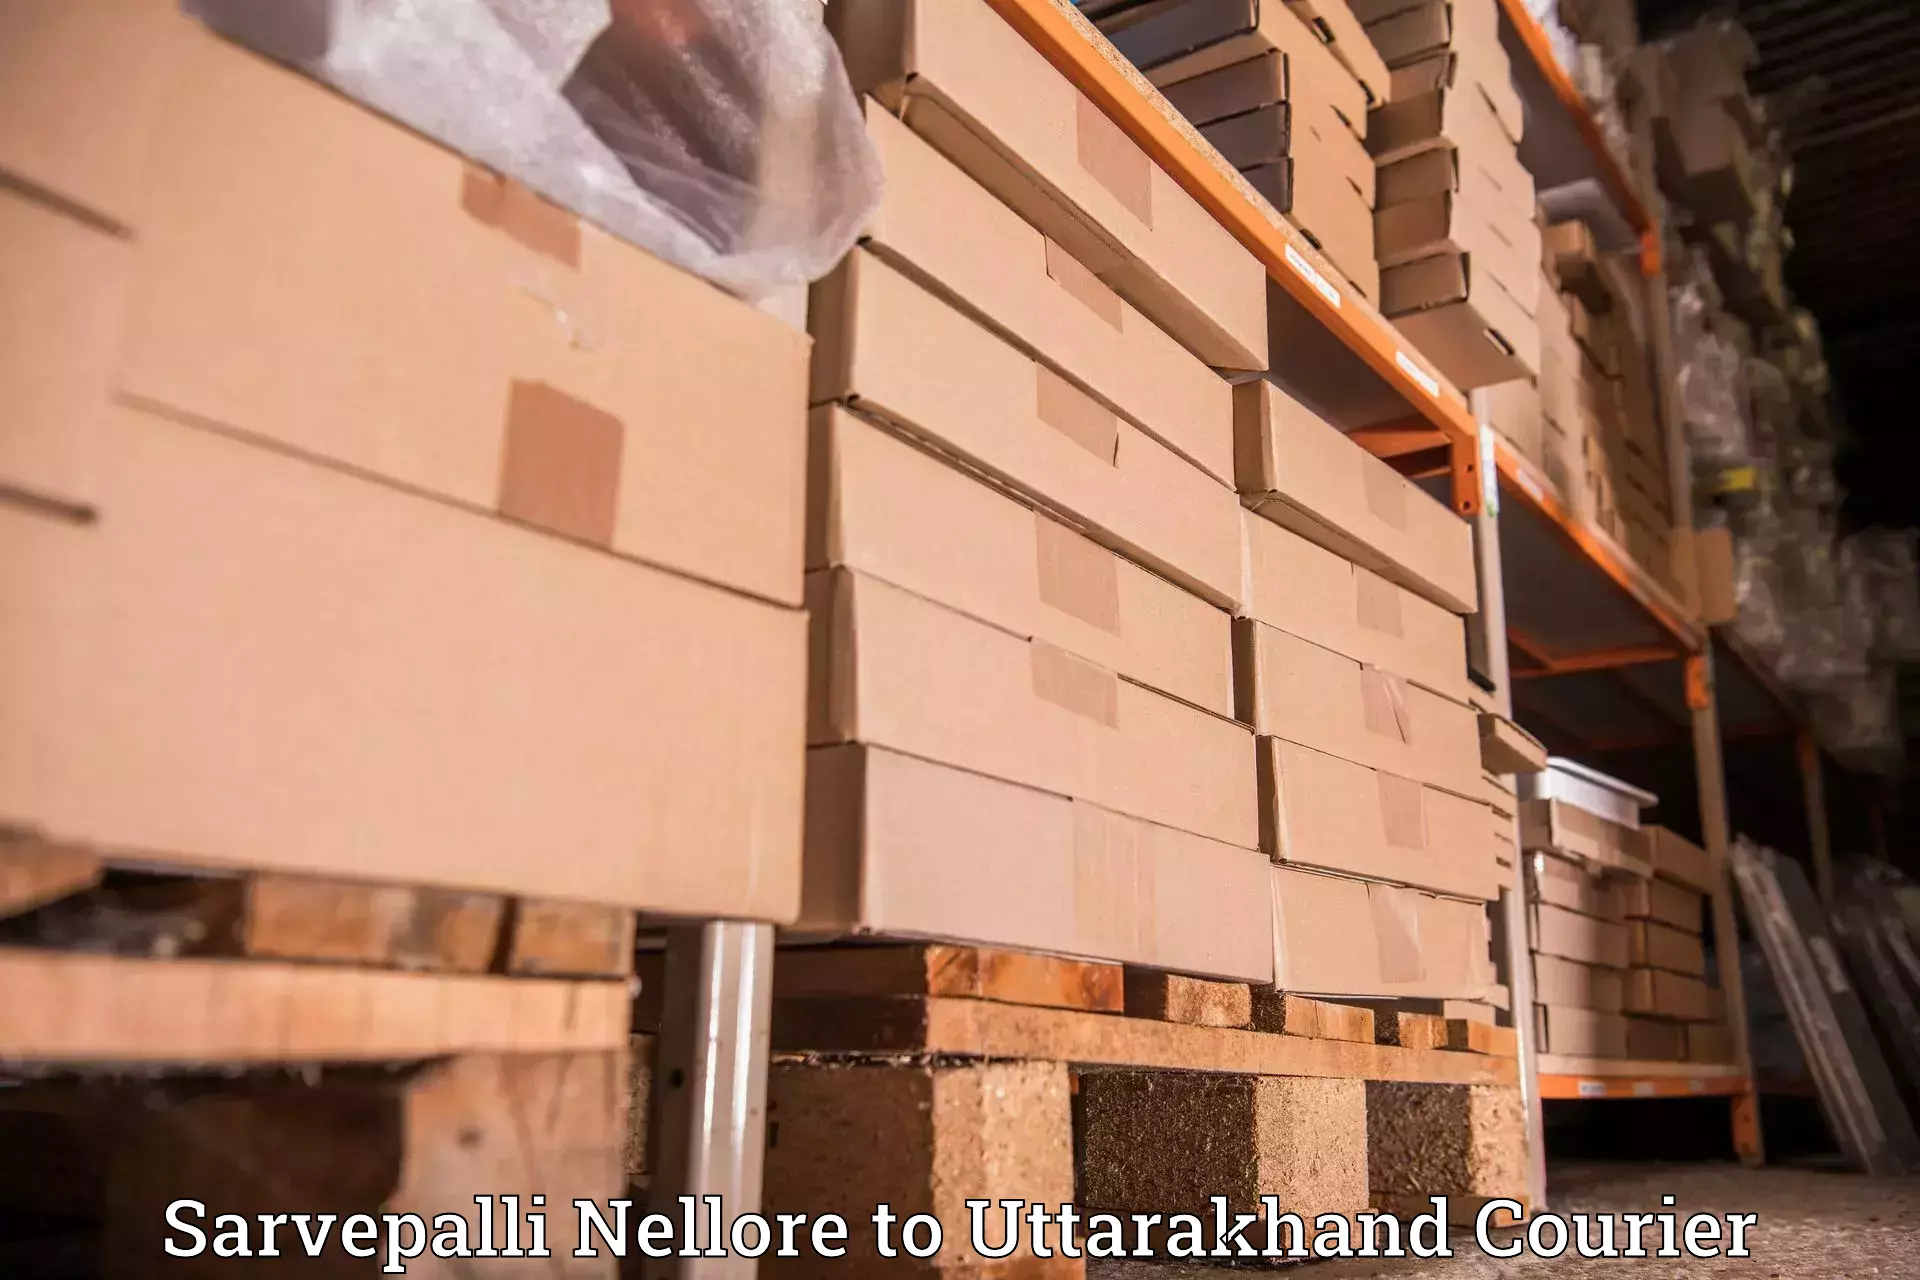 Efficient freight service Sarvepalli Nellore to Uttarakhand